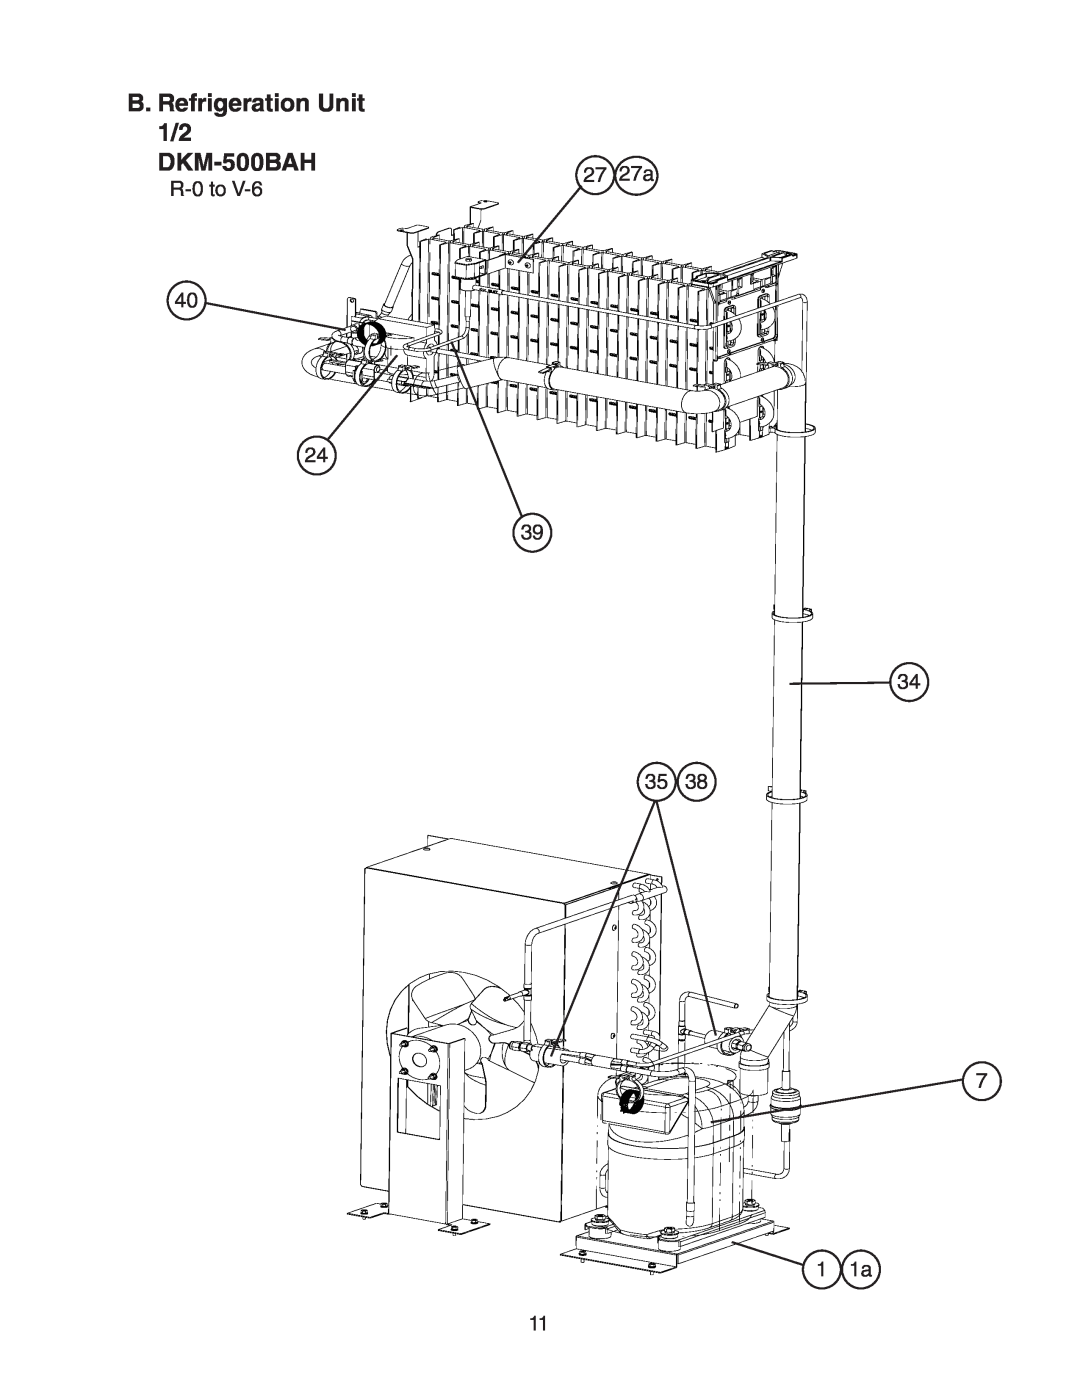 Hoshizaki DKM-500BWH manual B. Refrigeration Unit 1/2 DKM-500BAH, R-0to, 27 27a 39 34 35 7 1 1a 